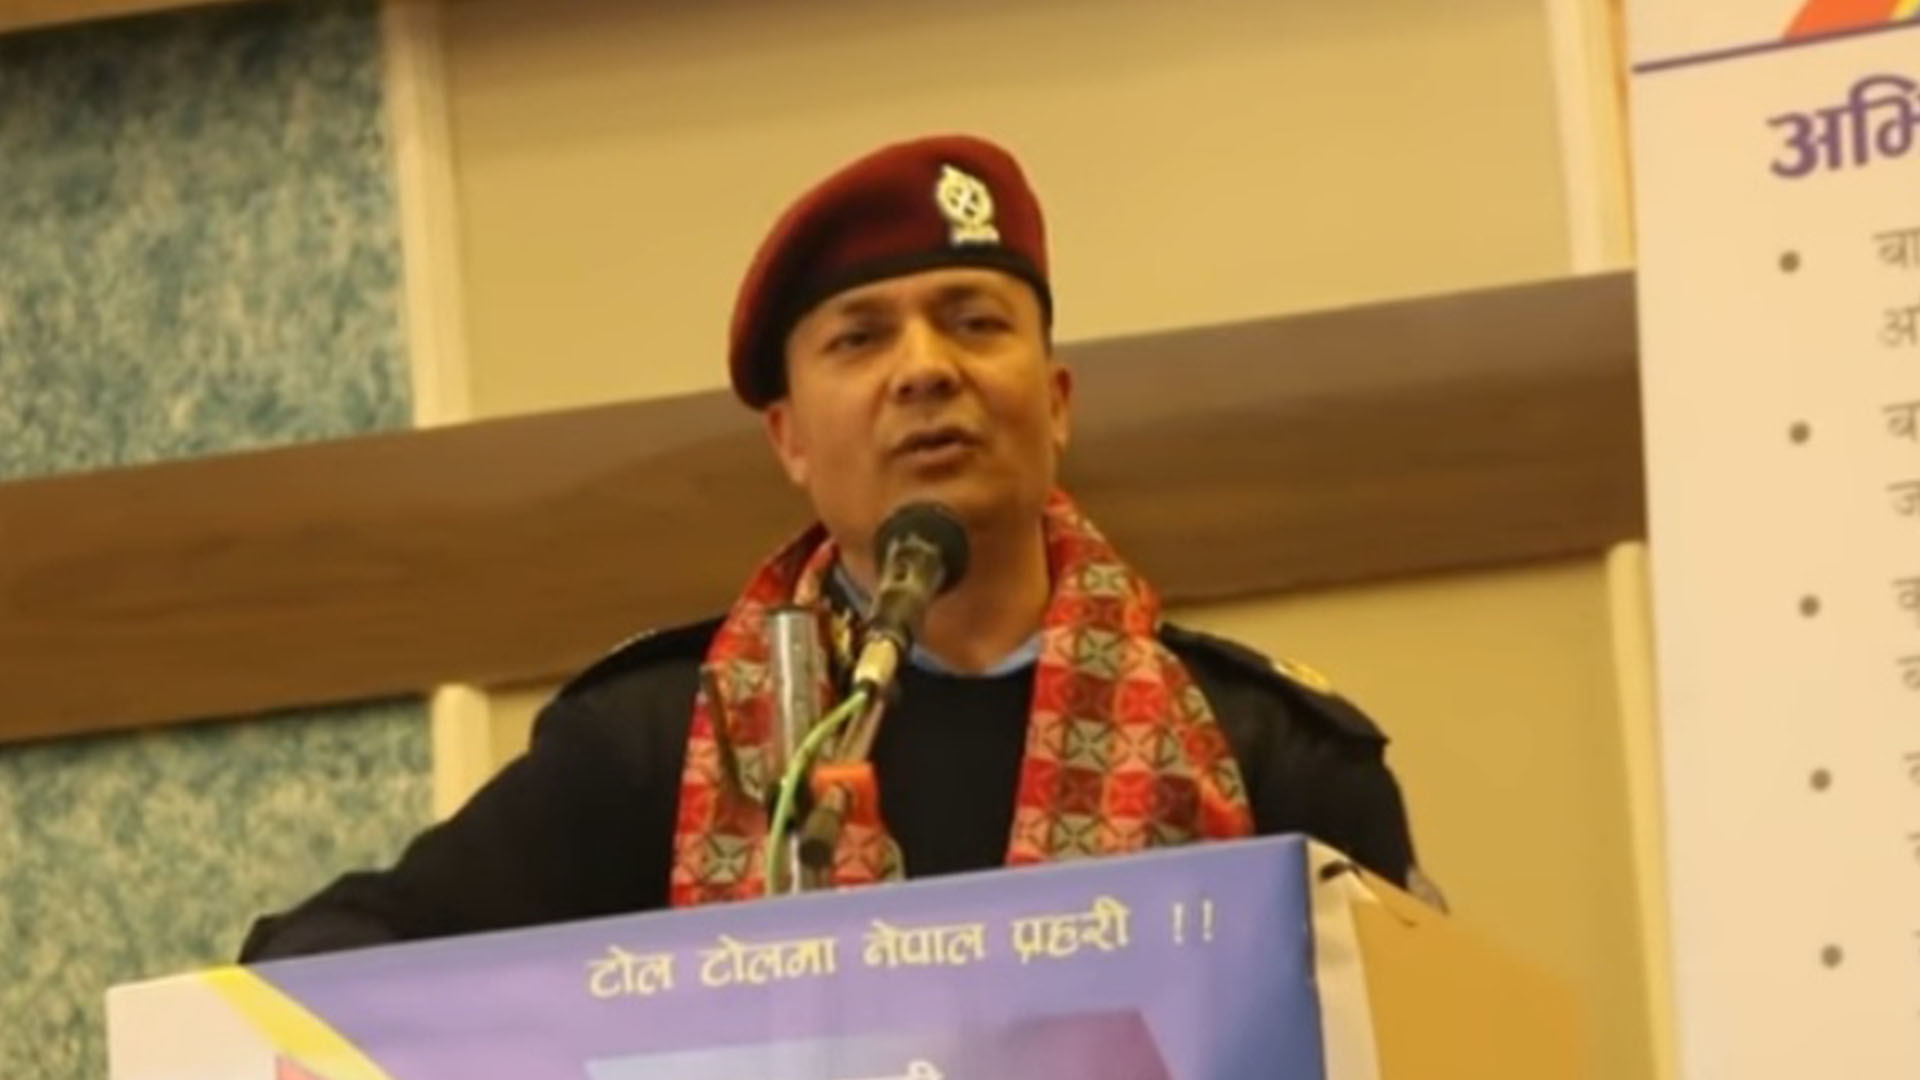 AIG Shailesh Thapa Kshetri  named the New IGP of Nepal Police